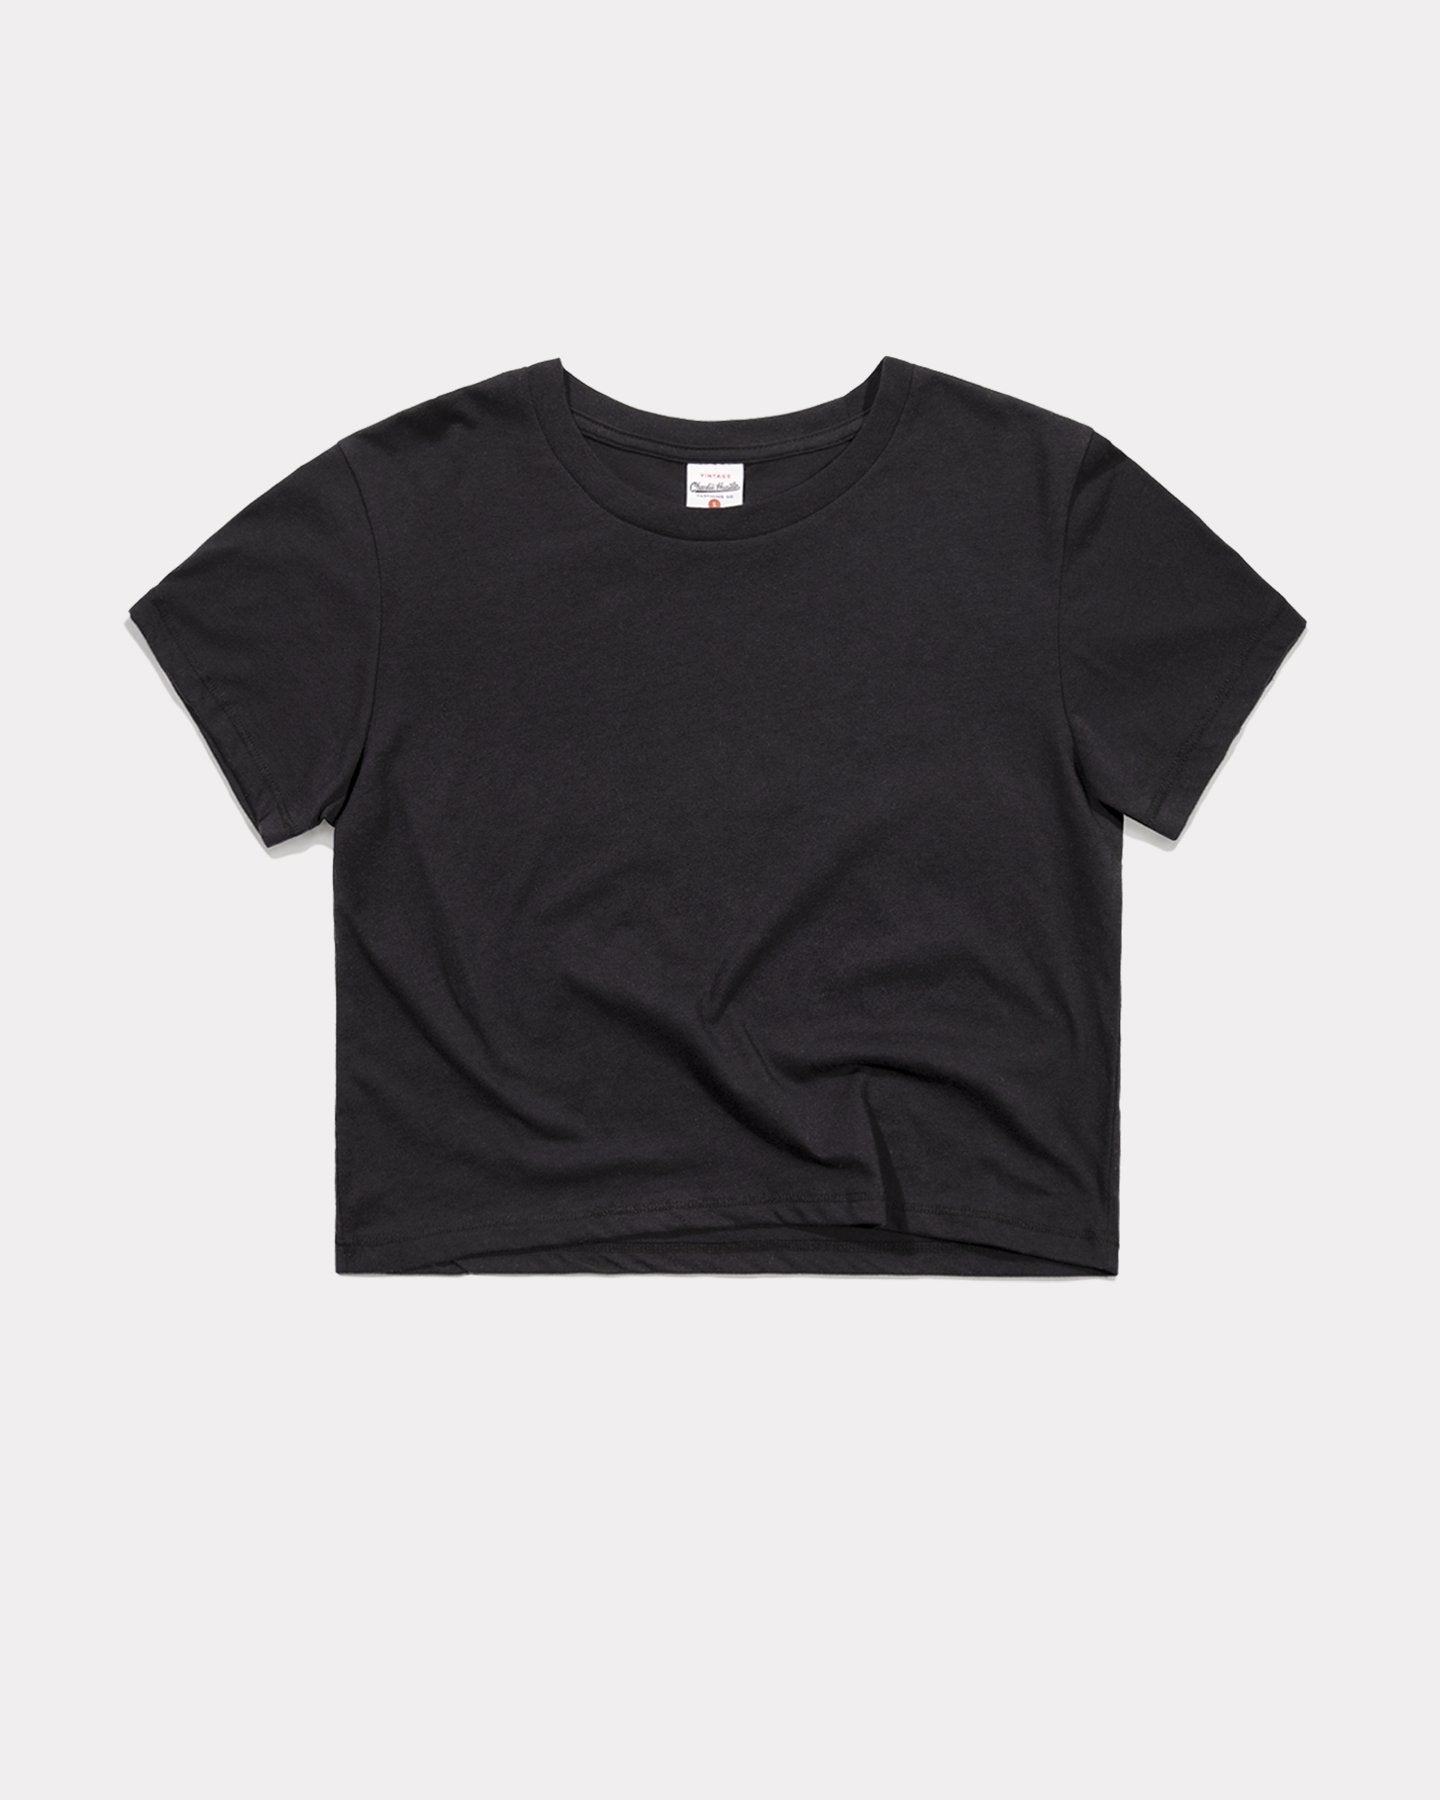 neutral Arena Irreplaceable Women's Essential Black Vintage Crop Top T-Shirt | CHARLIE HUSTLE